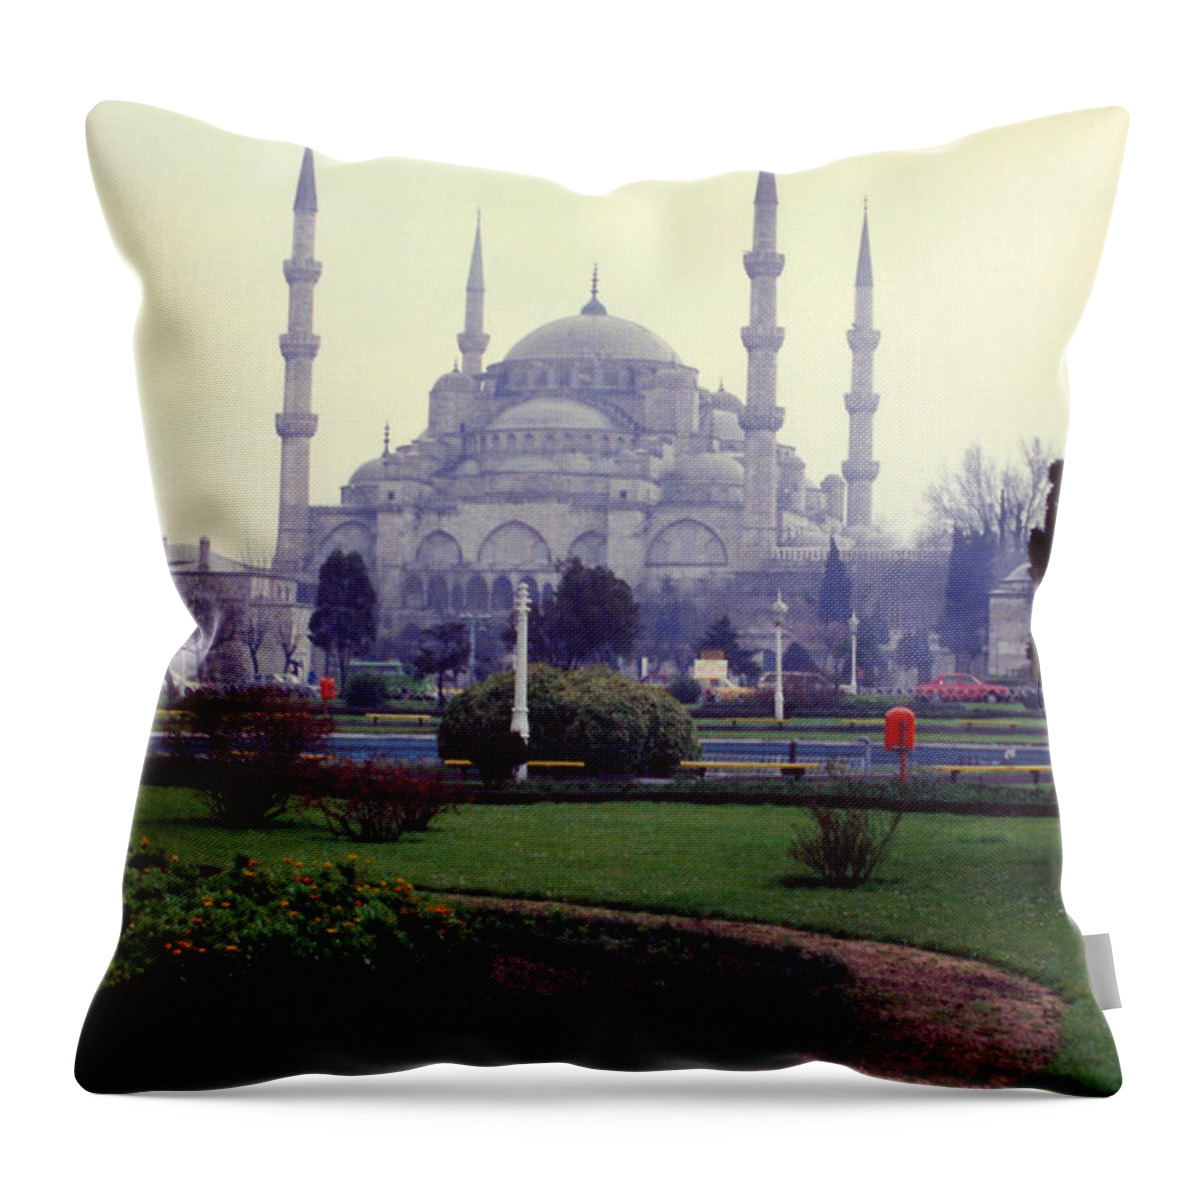 Mosque Photos Throw Pillow featuring the photograph Blue Mosque by Lou Ann Bagnall